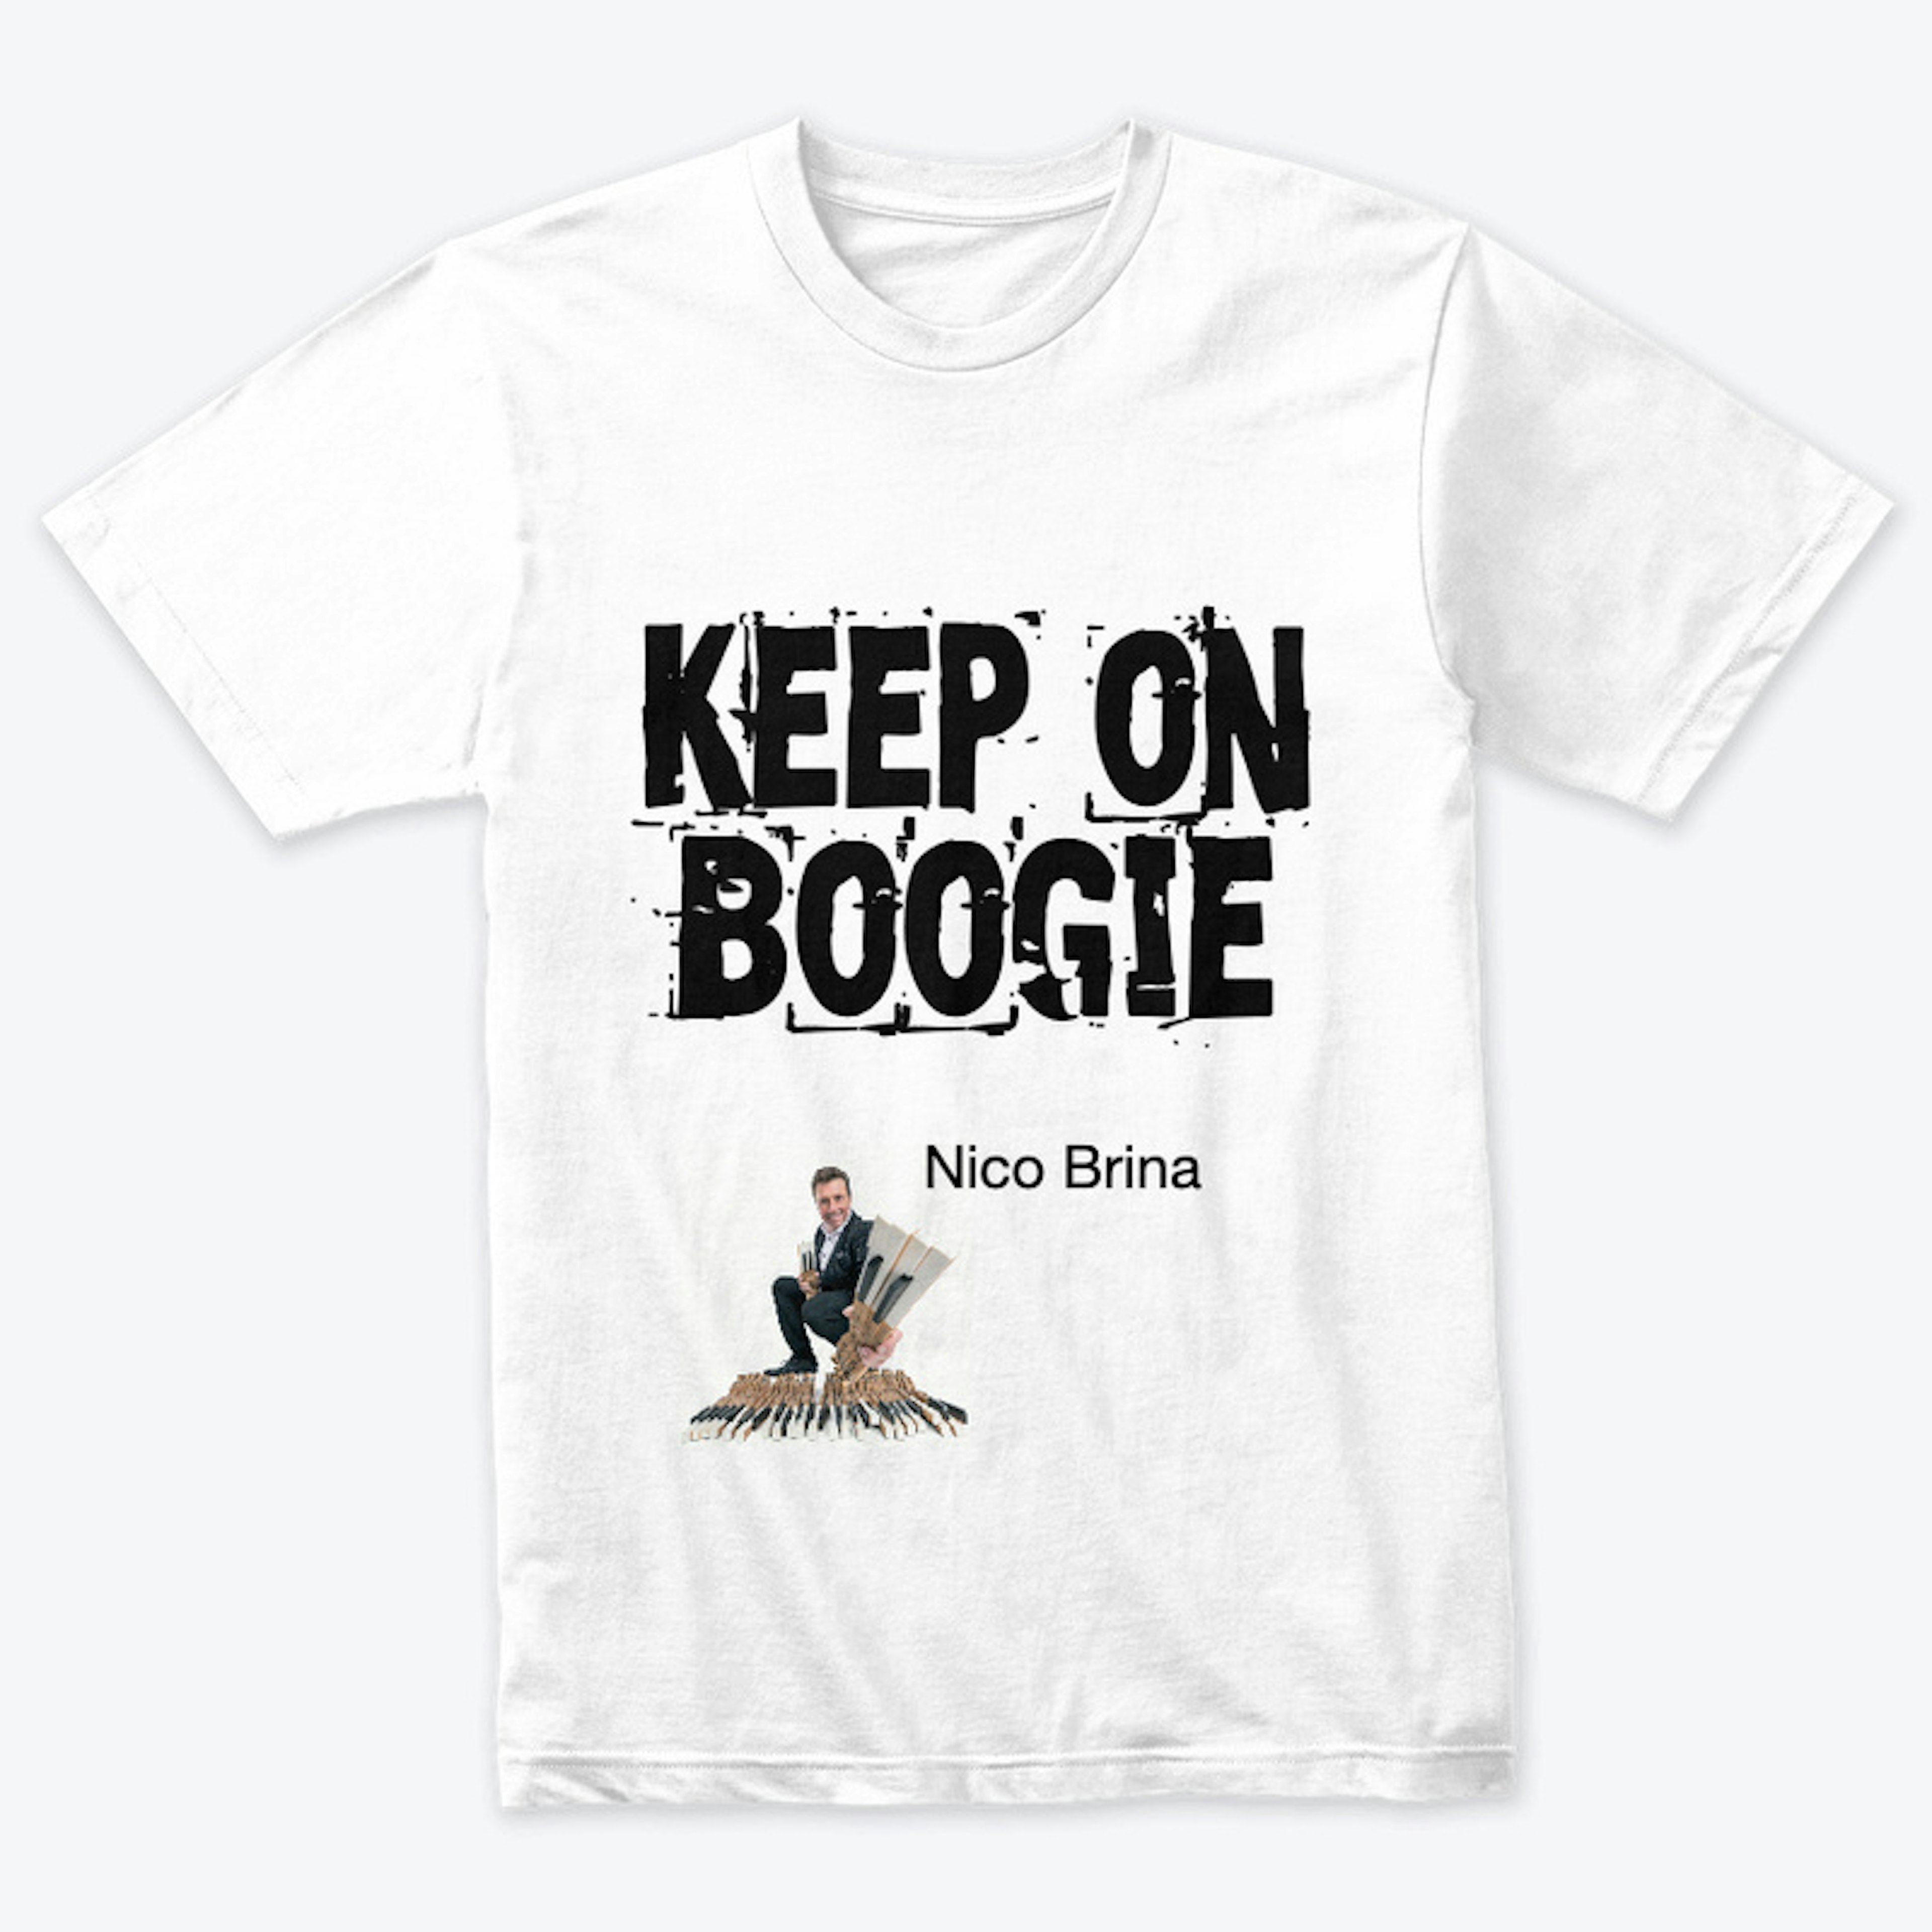 Keep on Boogie - Nico Brina